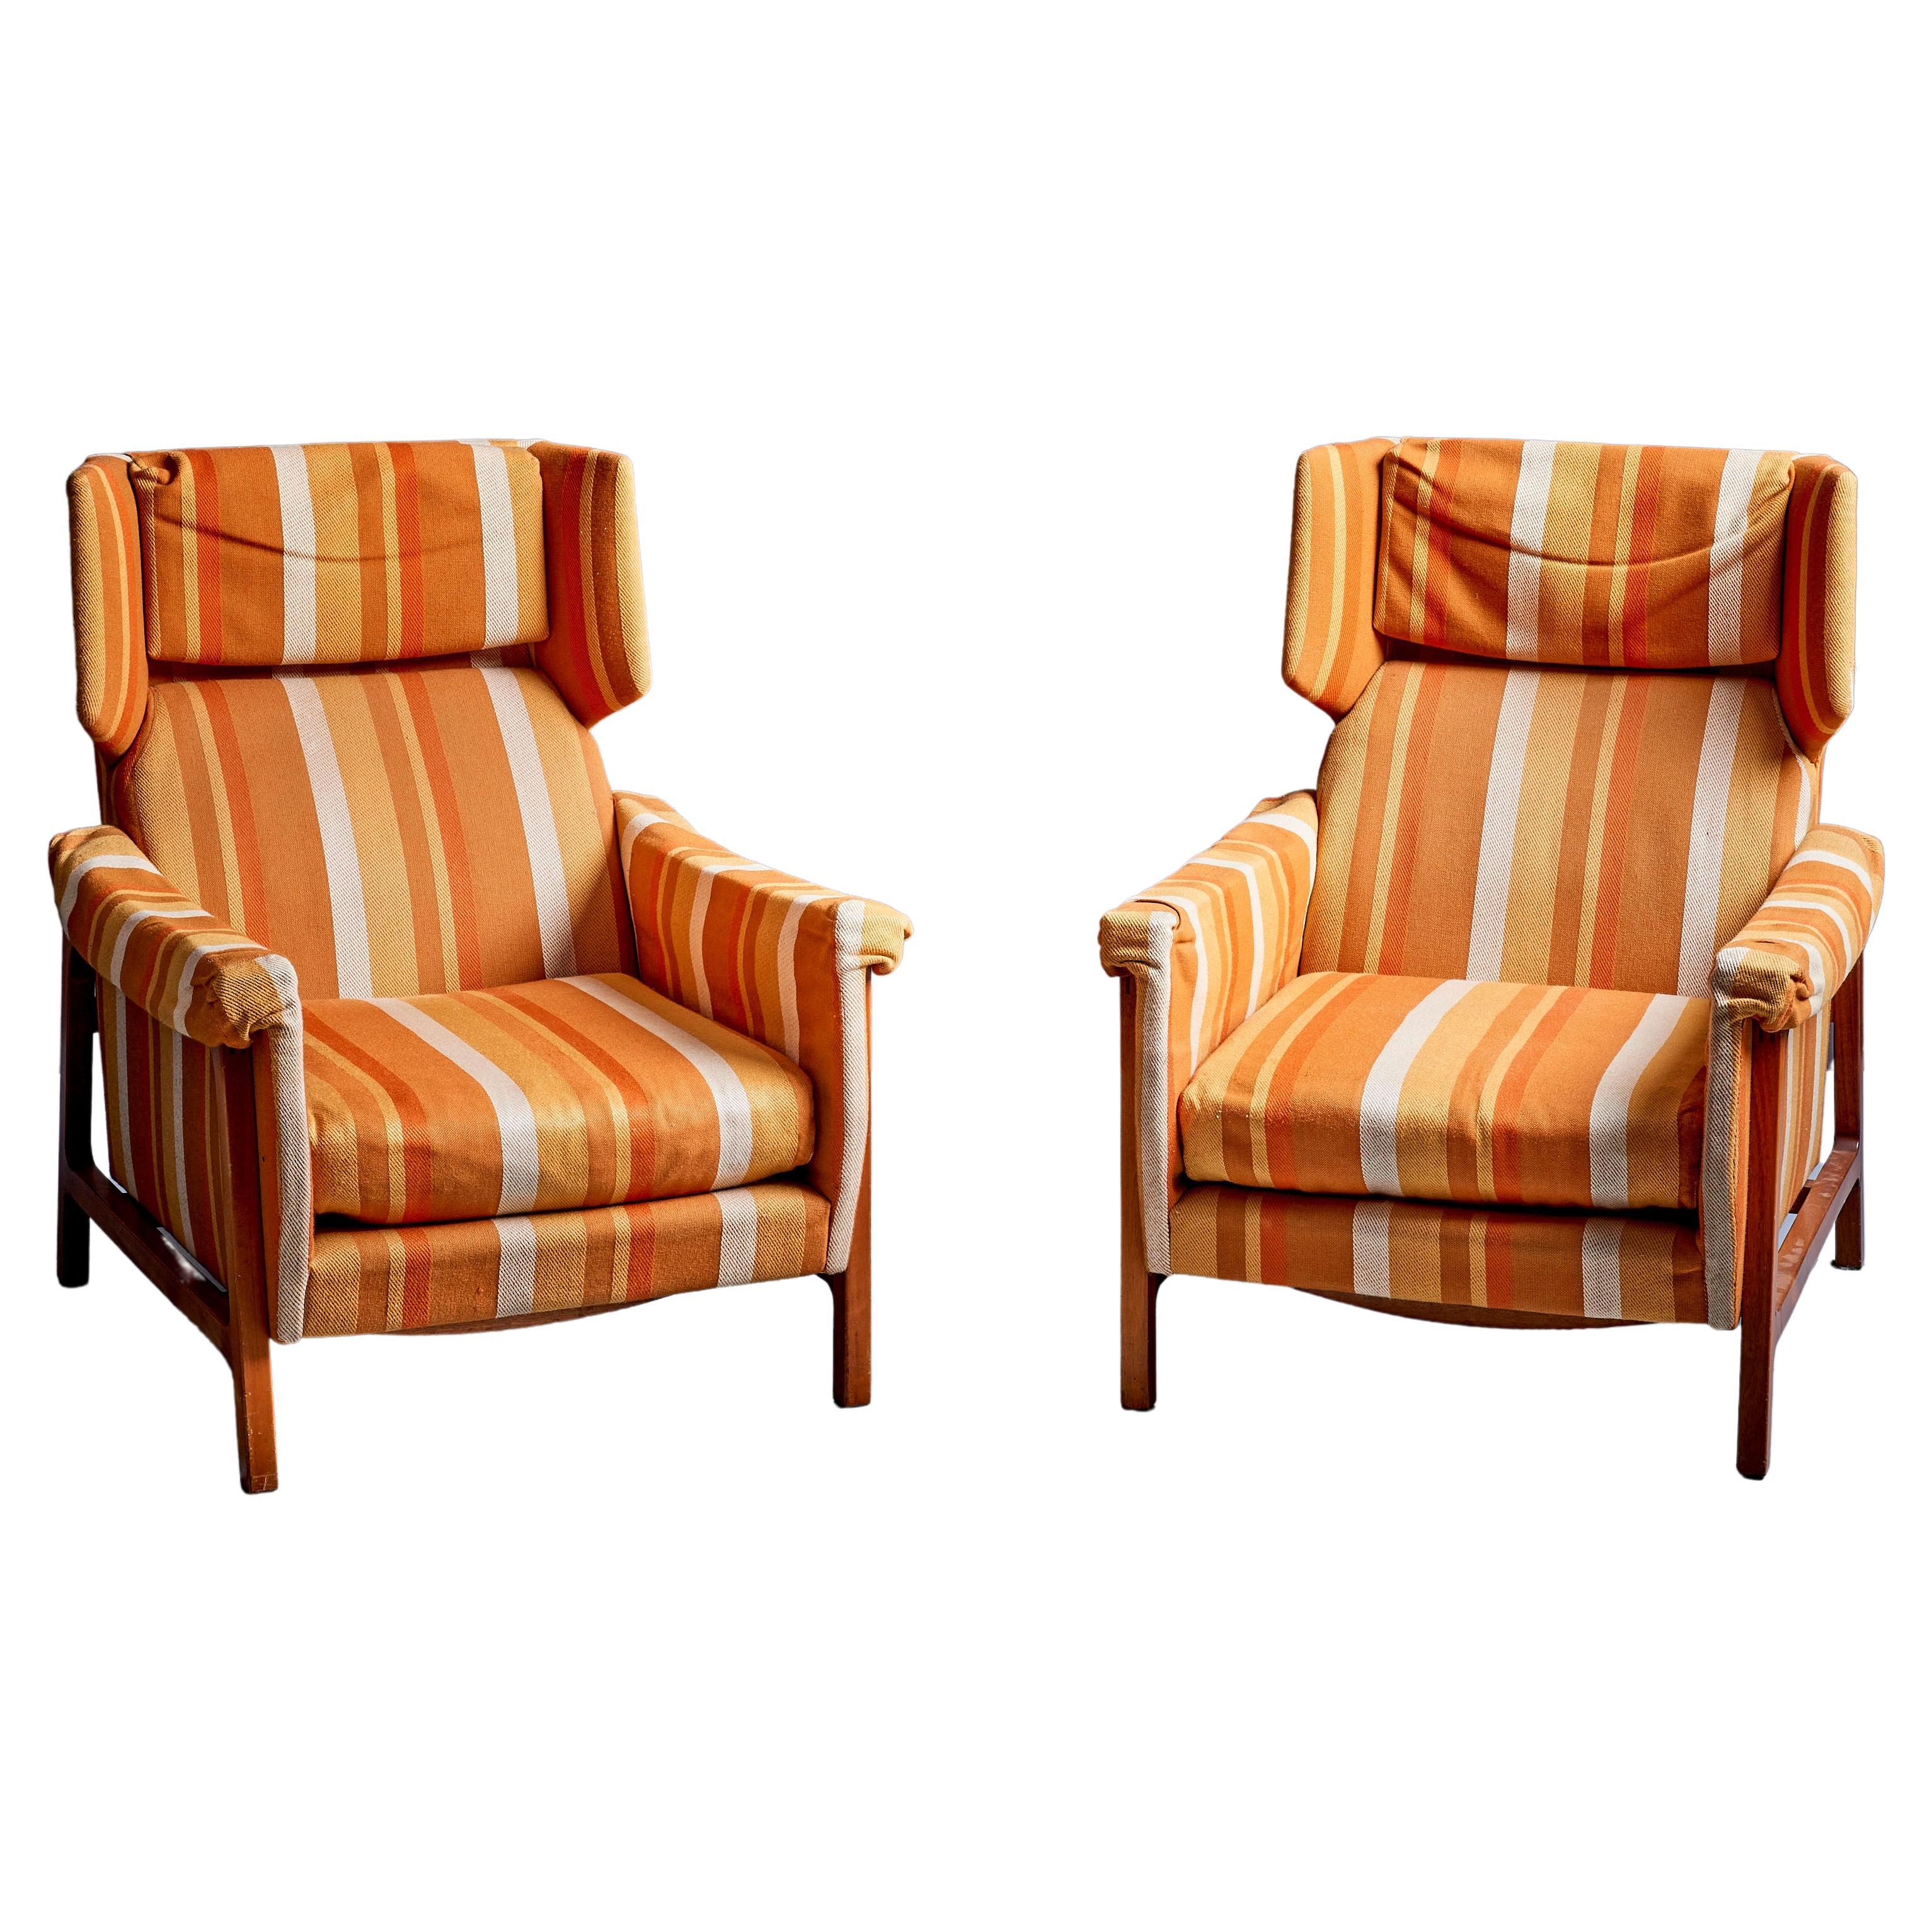 Pair of 2 Original Condition Umberto Colombo & Alberti Reggio Lounge Chairs   For Sale